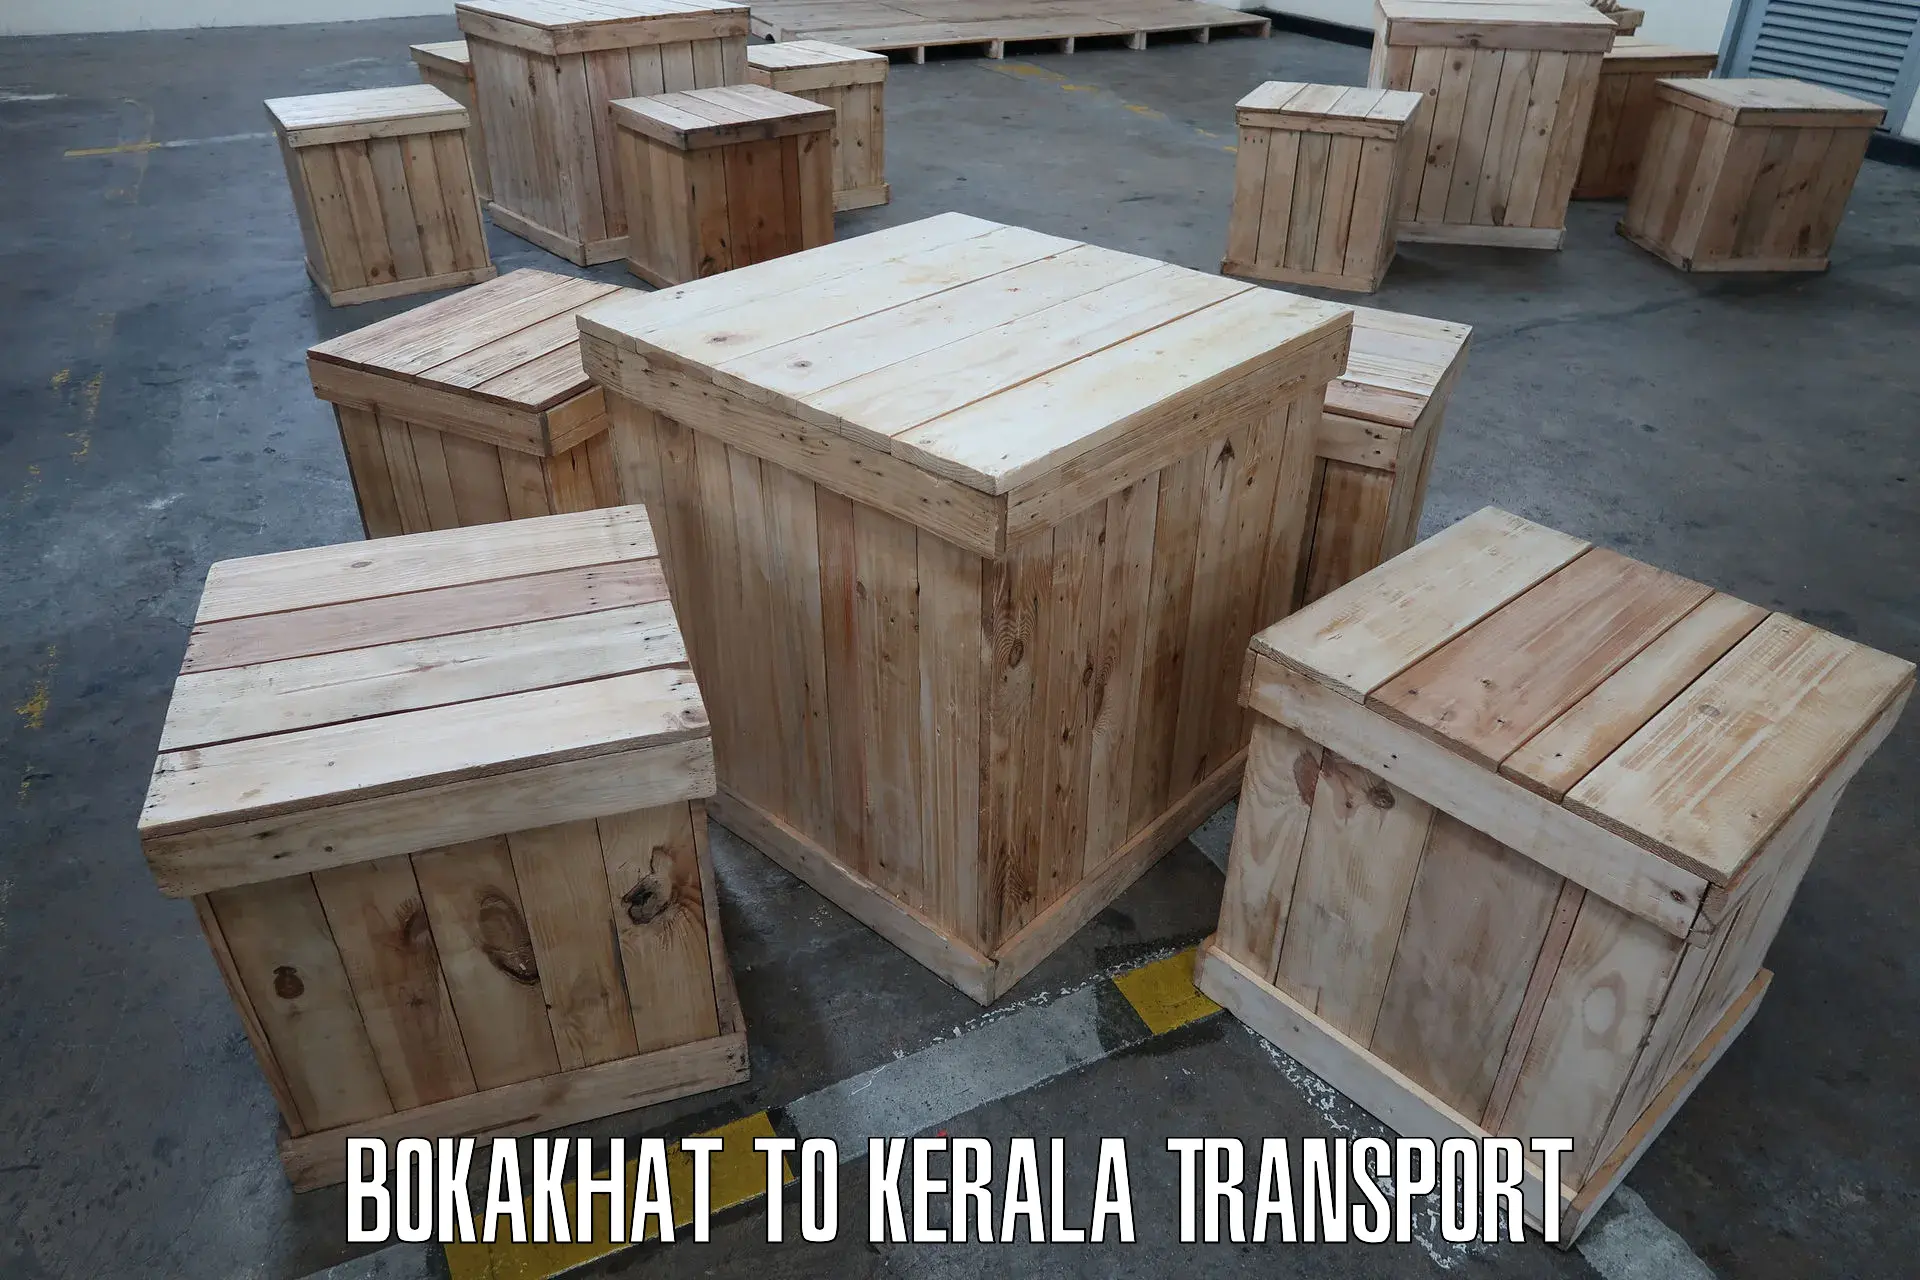 Road transport services Bokakhat to Cochin Port Kochi